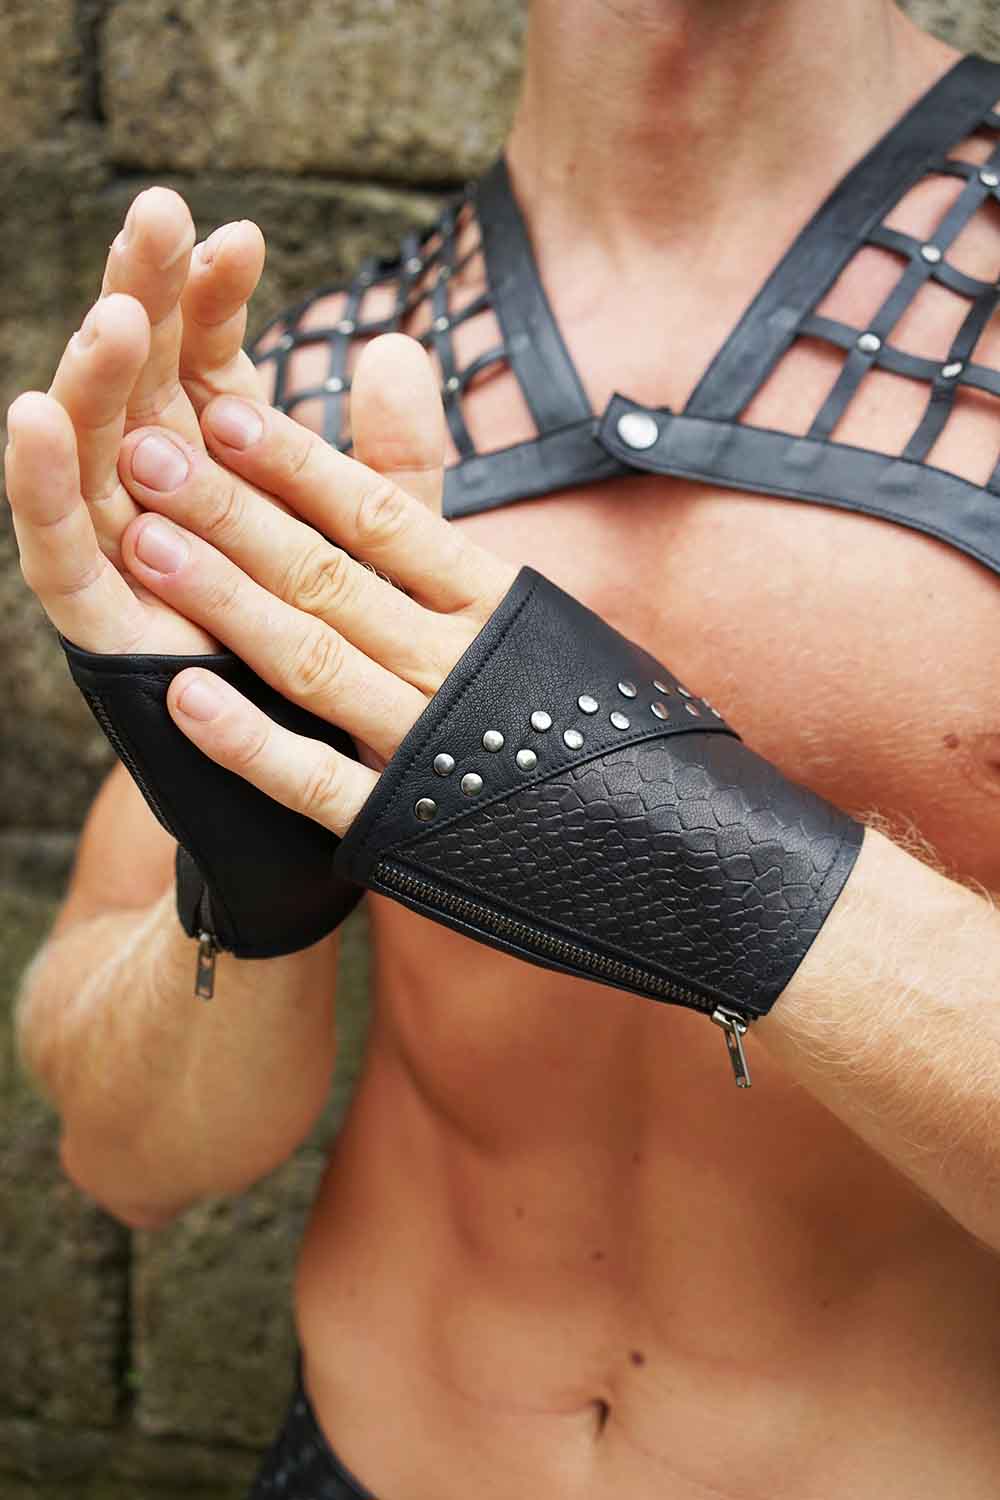 Anubis Fingerless Leather Gloves from Love Khaos Alternative Streetwear Clothing Brand